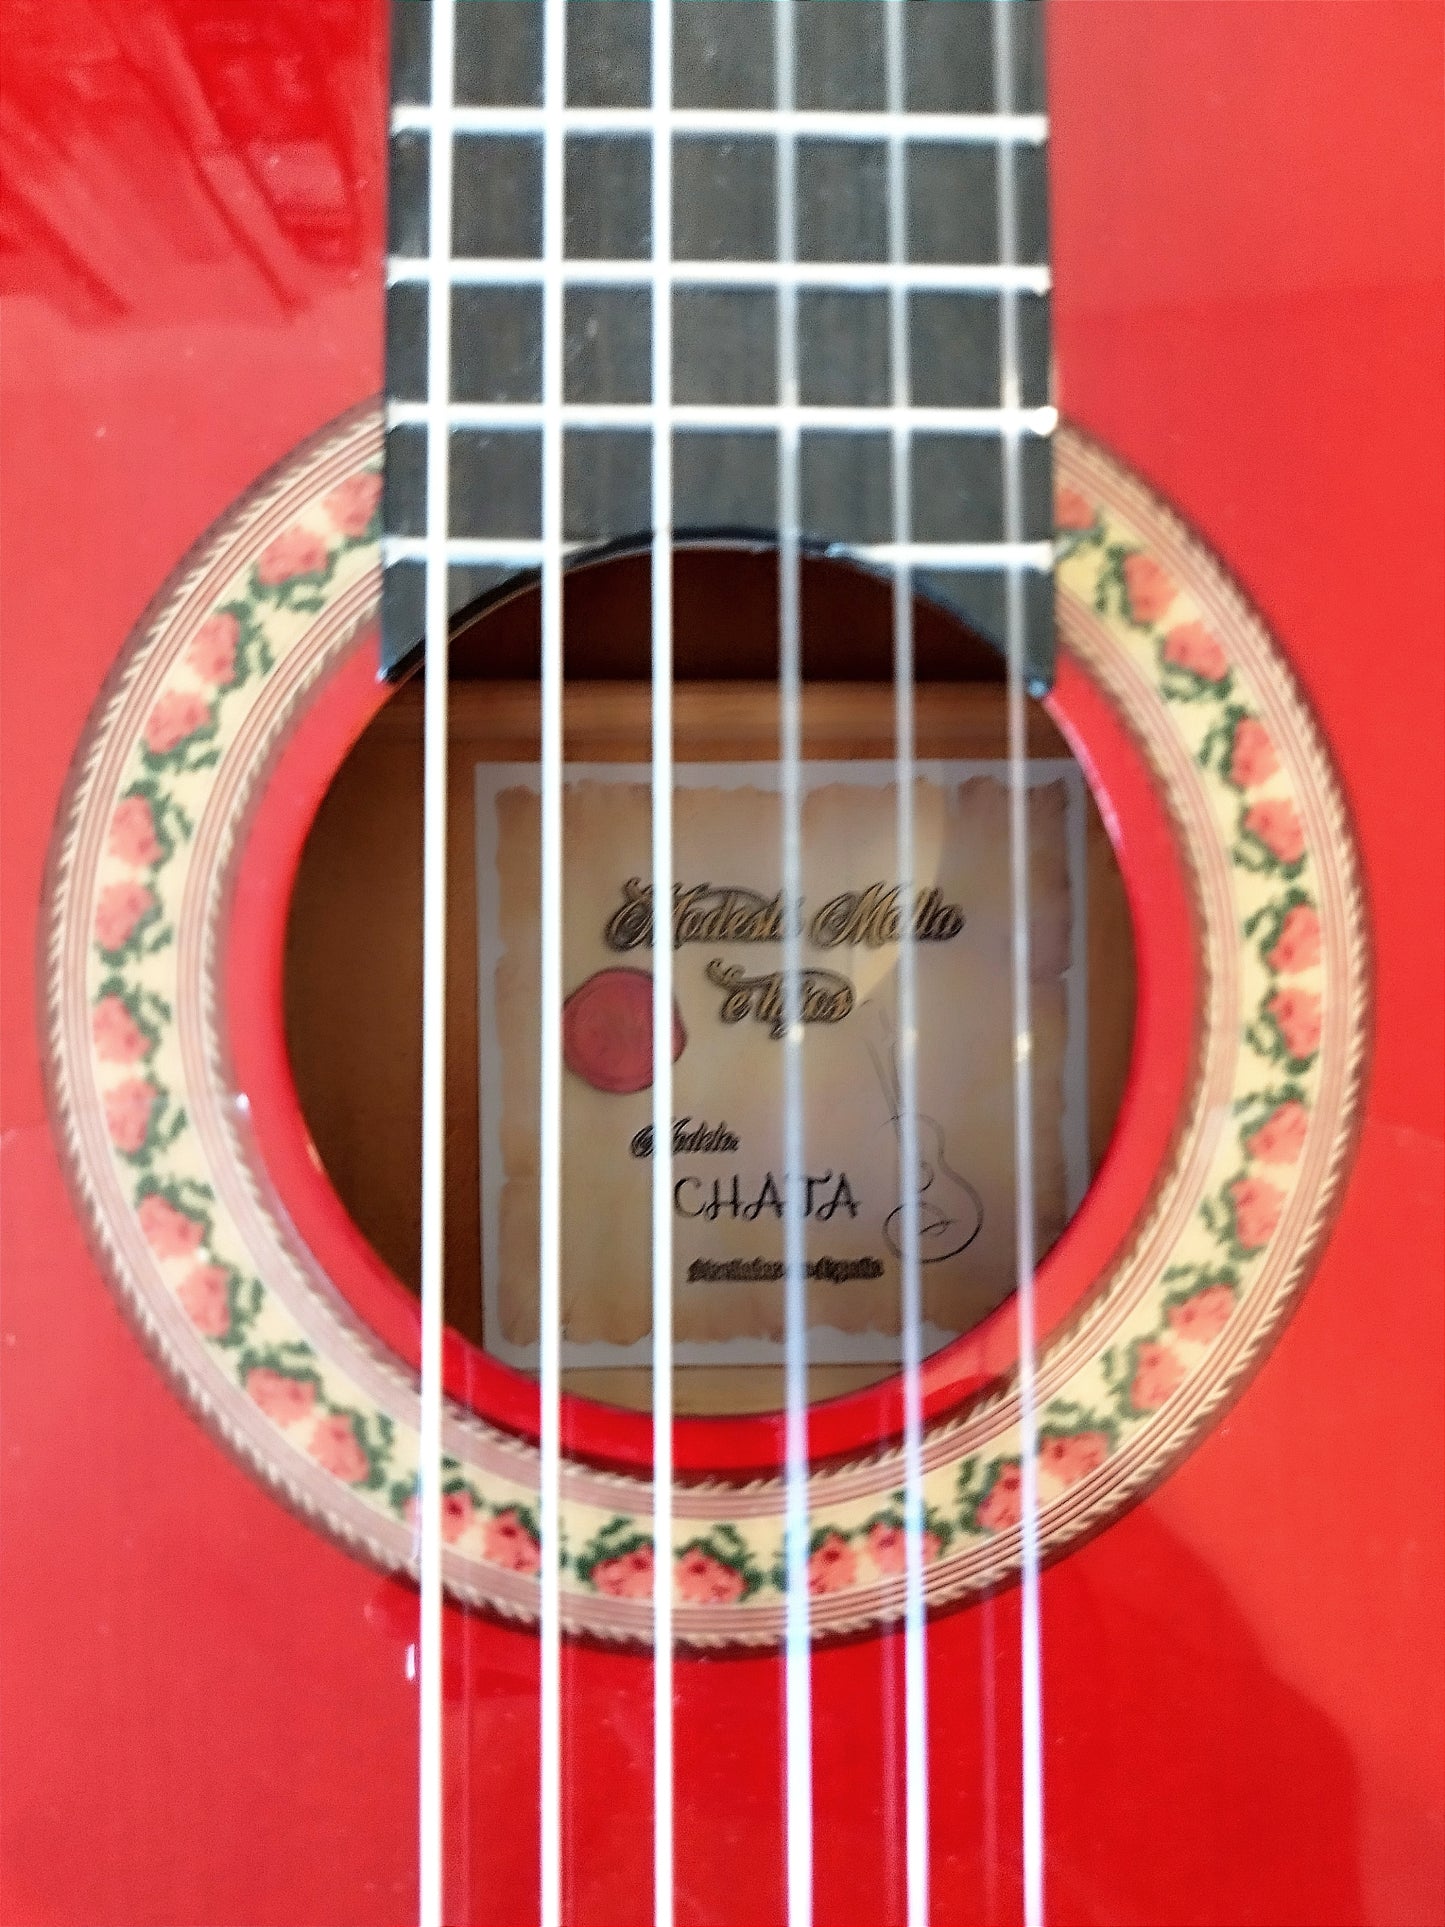 Guitarra Flamenca Modesto Malla "Chata" roja